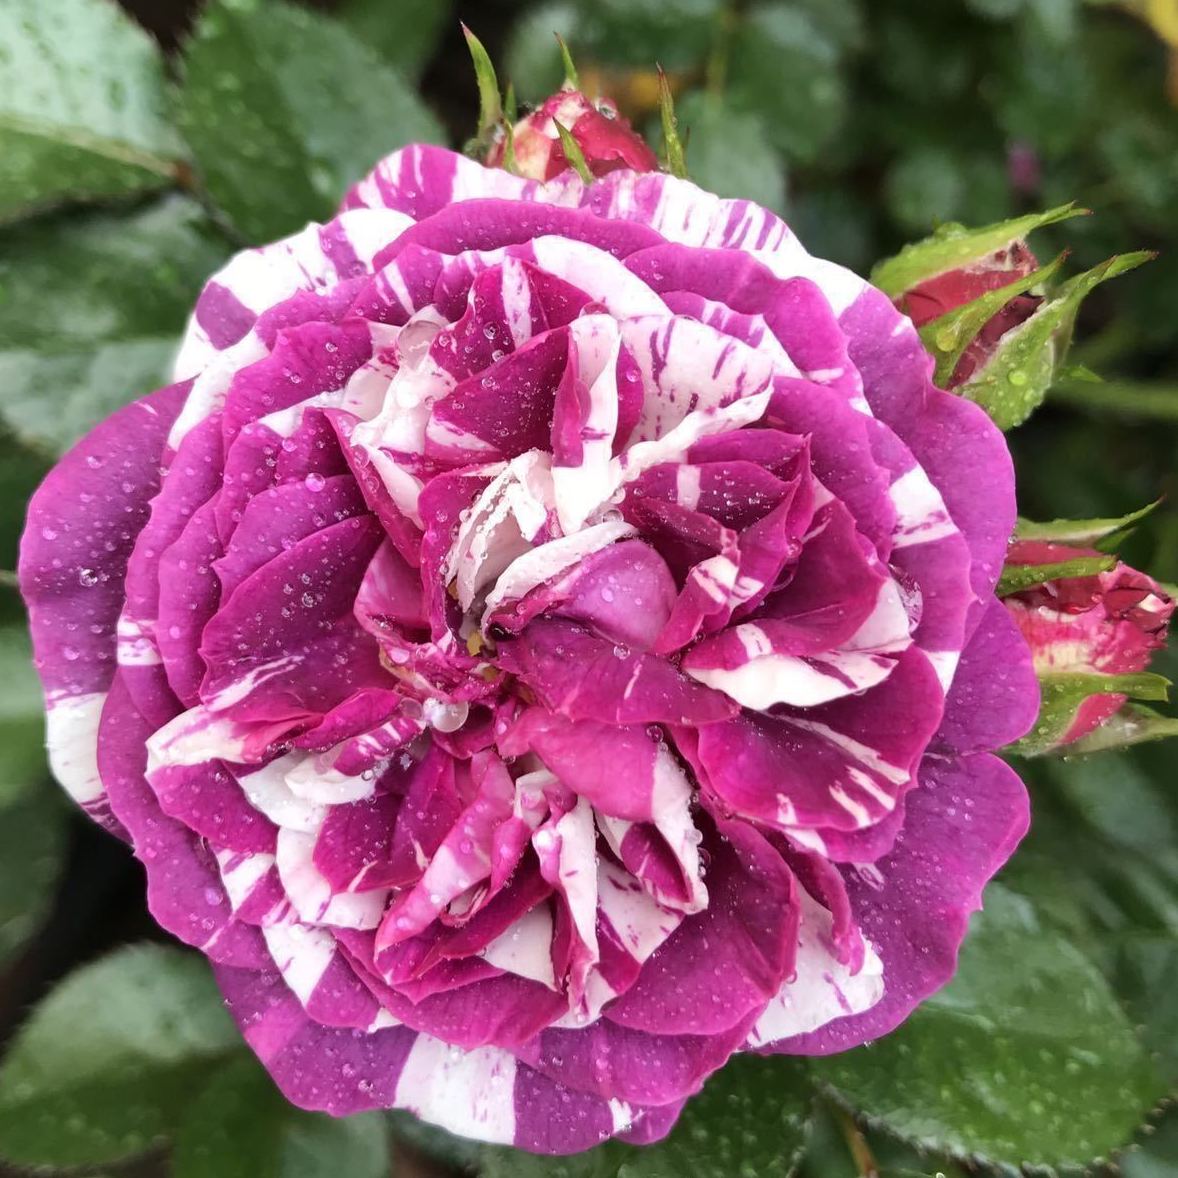 Rose Plant "Scented Jewel” | 芬芳宝石 センティッドジュエル